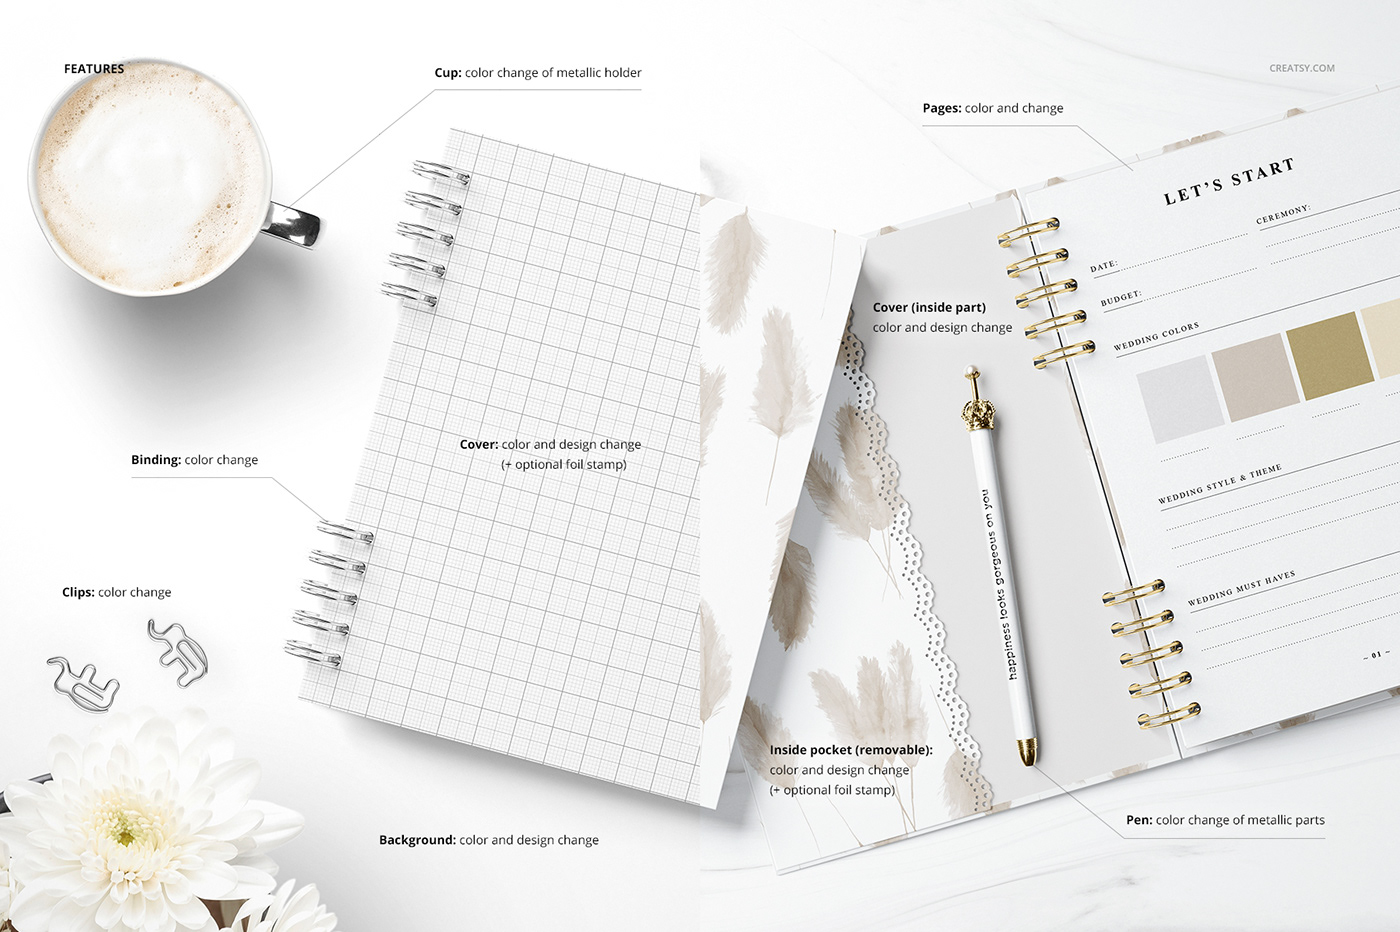 Binder cover creatsy hard mock-up Mockup notebook planner template wedding